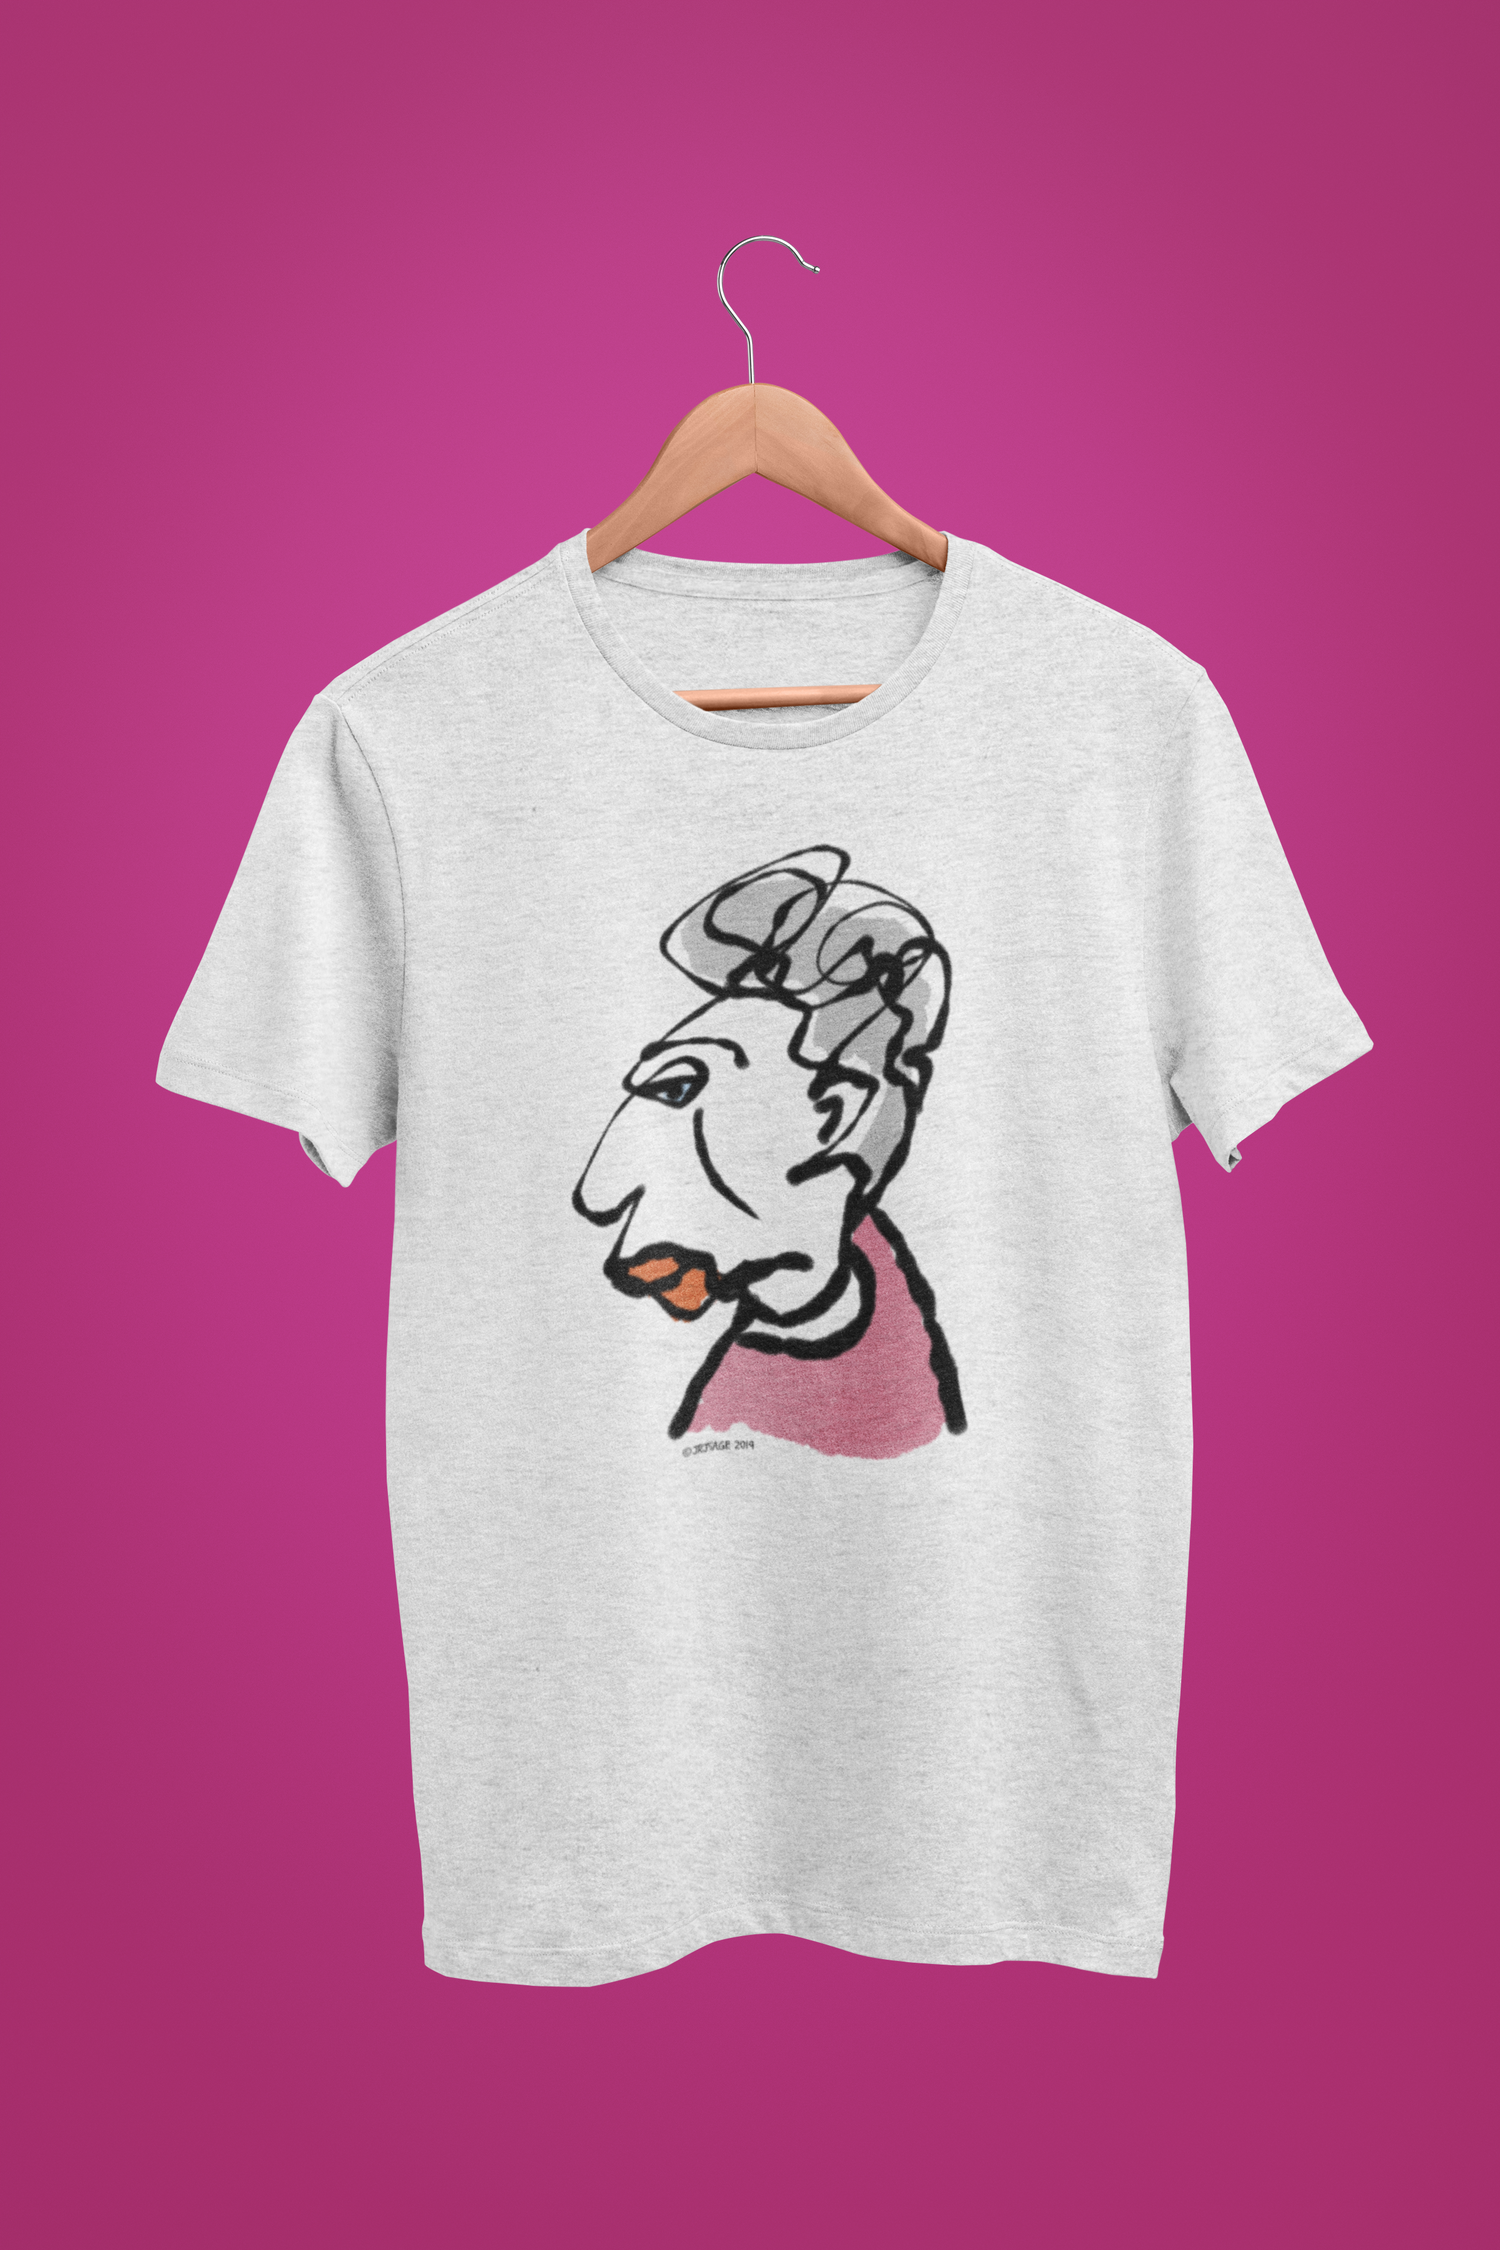 Glamorous Granny T-shirt - Original illustrated gorgeous granny on cream heather grey grandma t-shirts by Hector and Bone